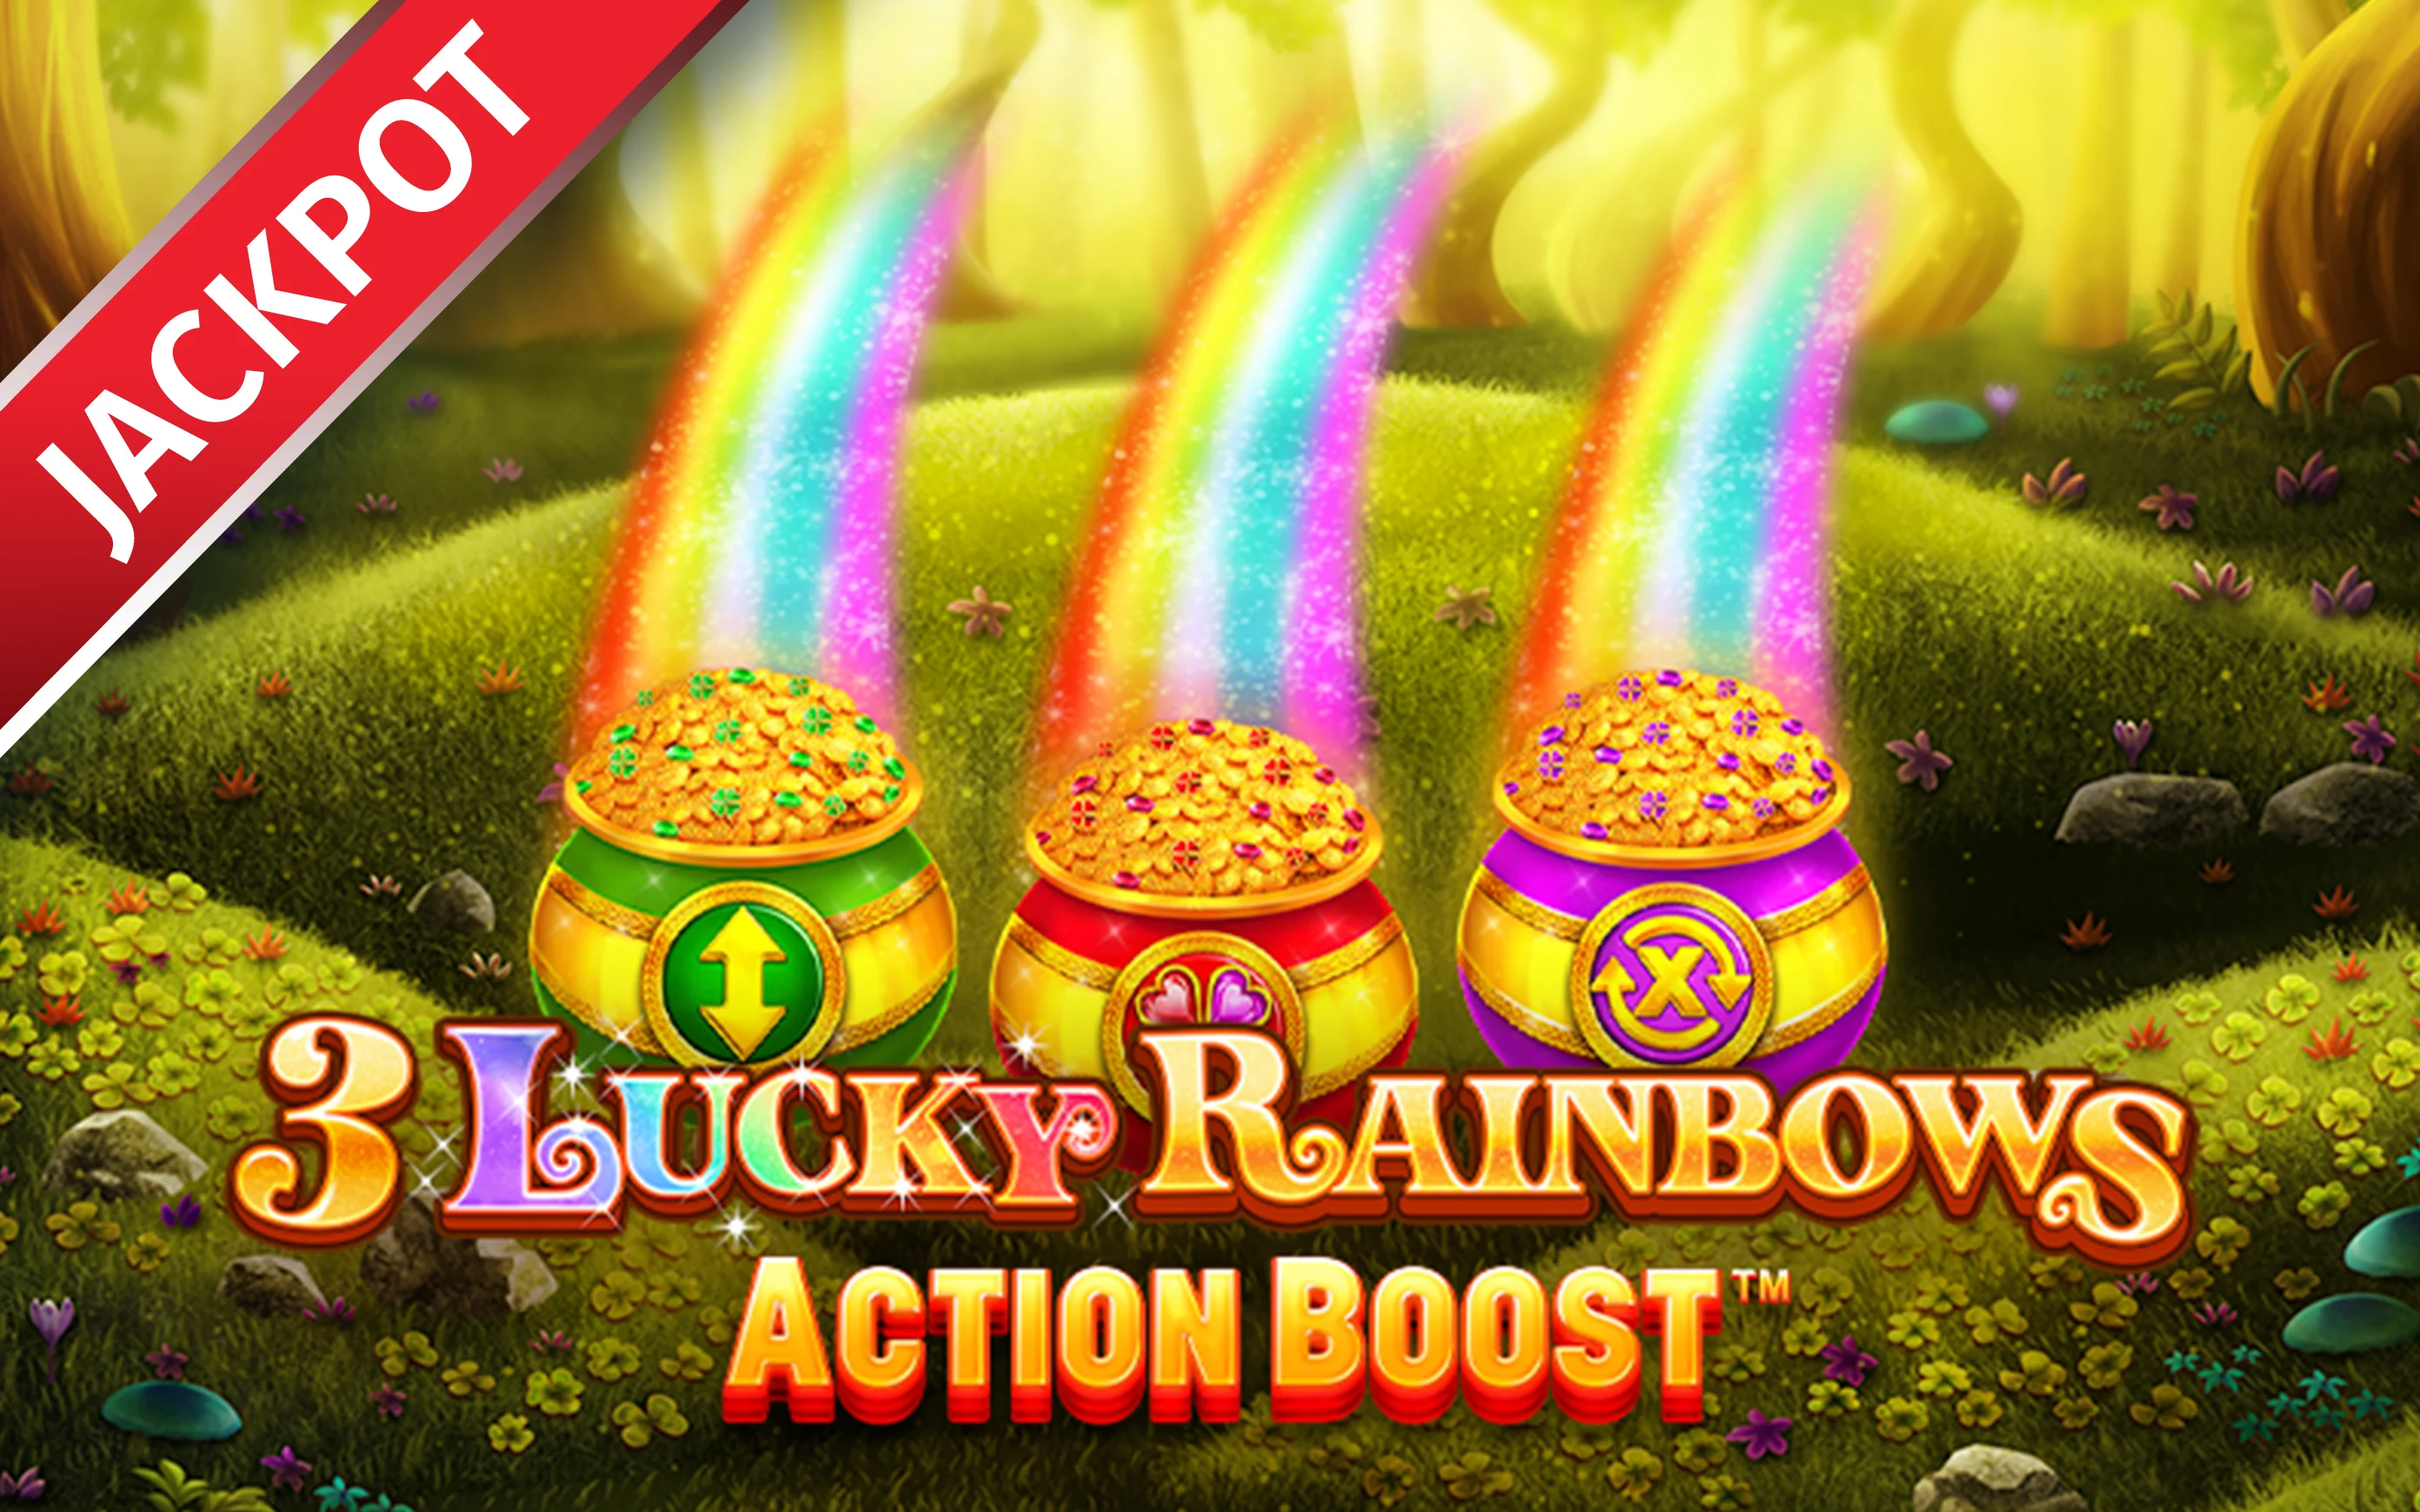 在Starcasino.be在线赌场上玩Action Boost ™ 3 Lucky Rainbows